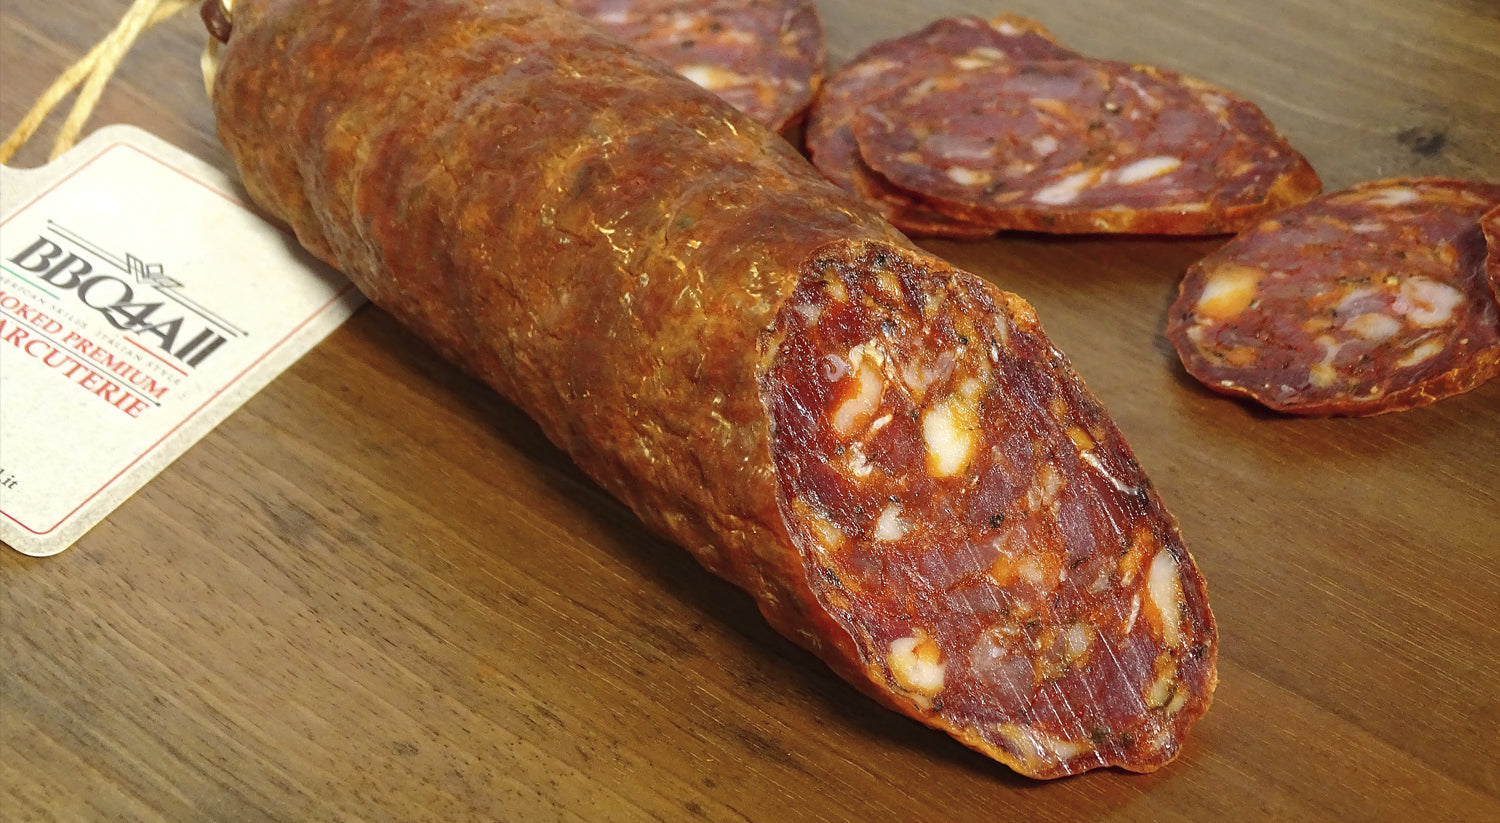 Chorizo de Cerdo - BBQ4All Smoked Premium Charcuterie